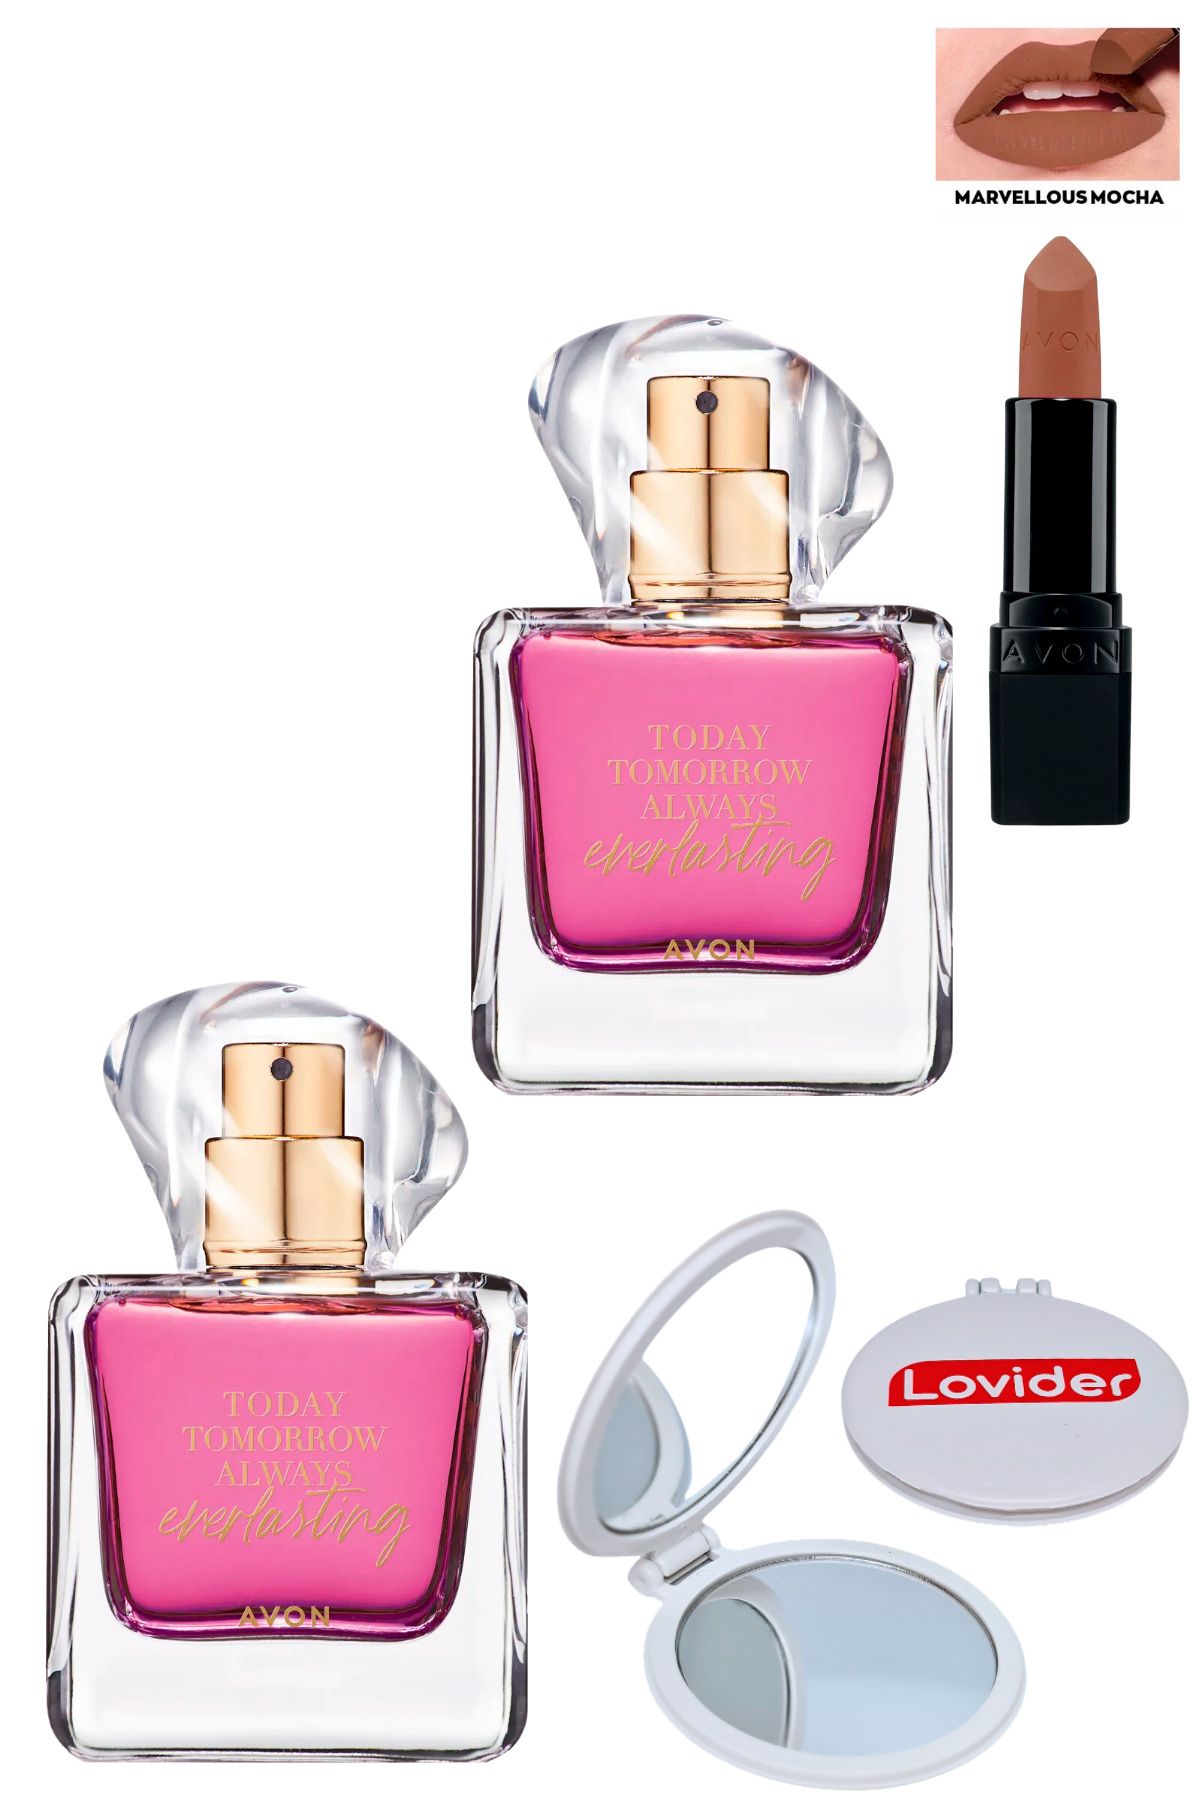 Avon TTA Everlasting Kadın Parfüm EDP 50ml x 2 Adet + Marvellous Mocha Mat Ruj + Lovider Cep Aynası